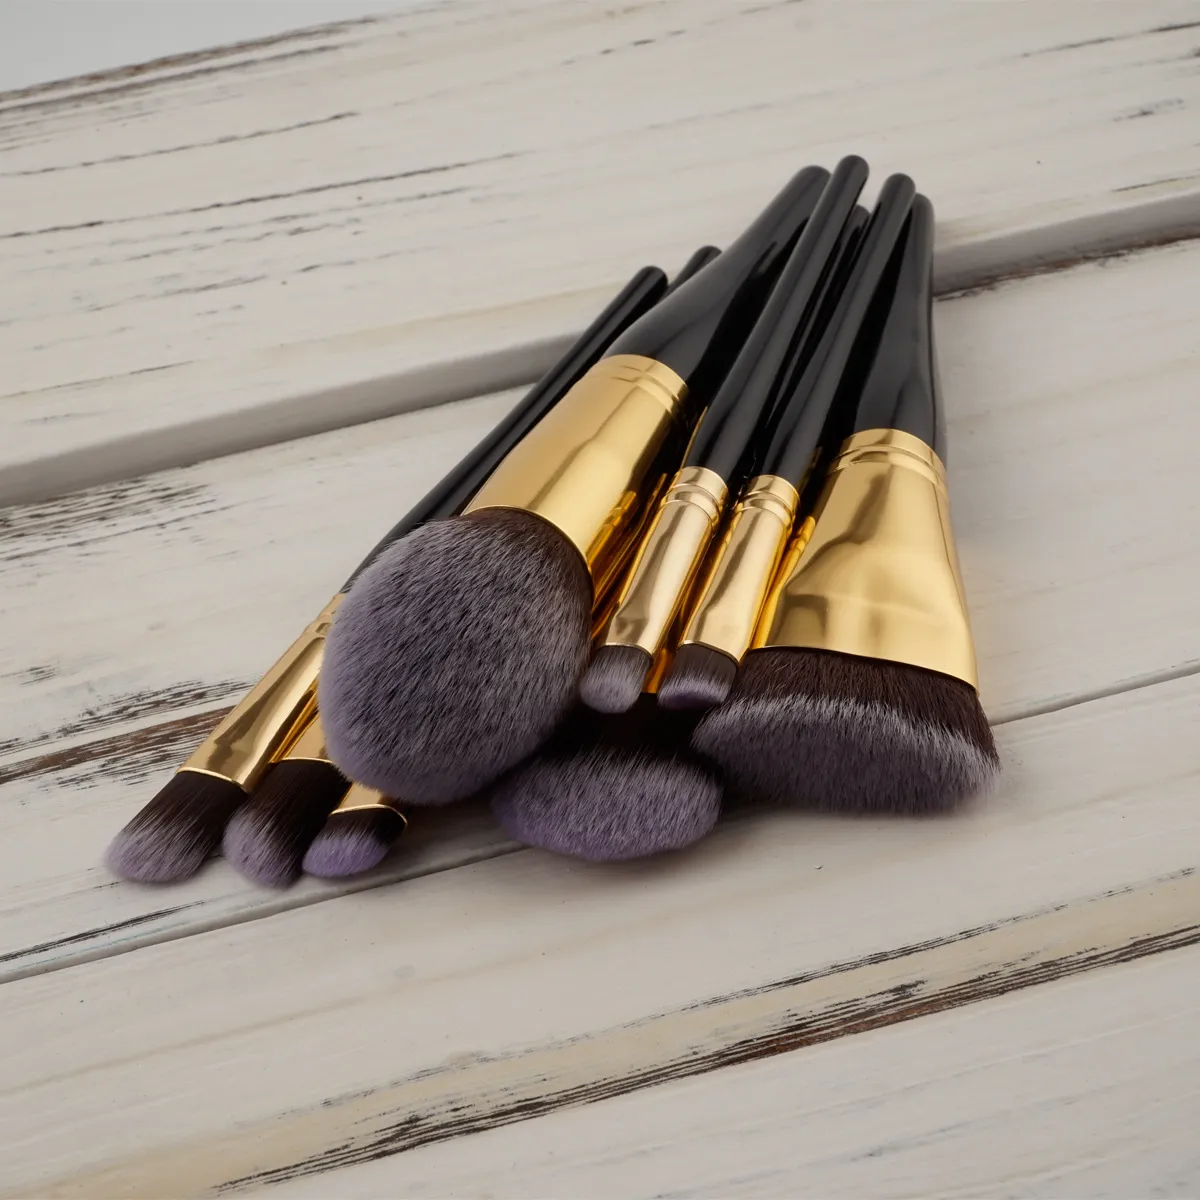 Premium Makeup brushes set Soft Synthetic Hair Brush Professional Makeup Artist Brush Tool Makeup Brush Kit Tools DHL Free